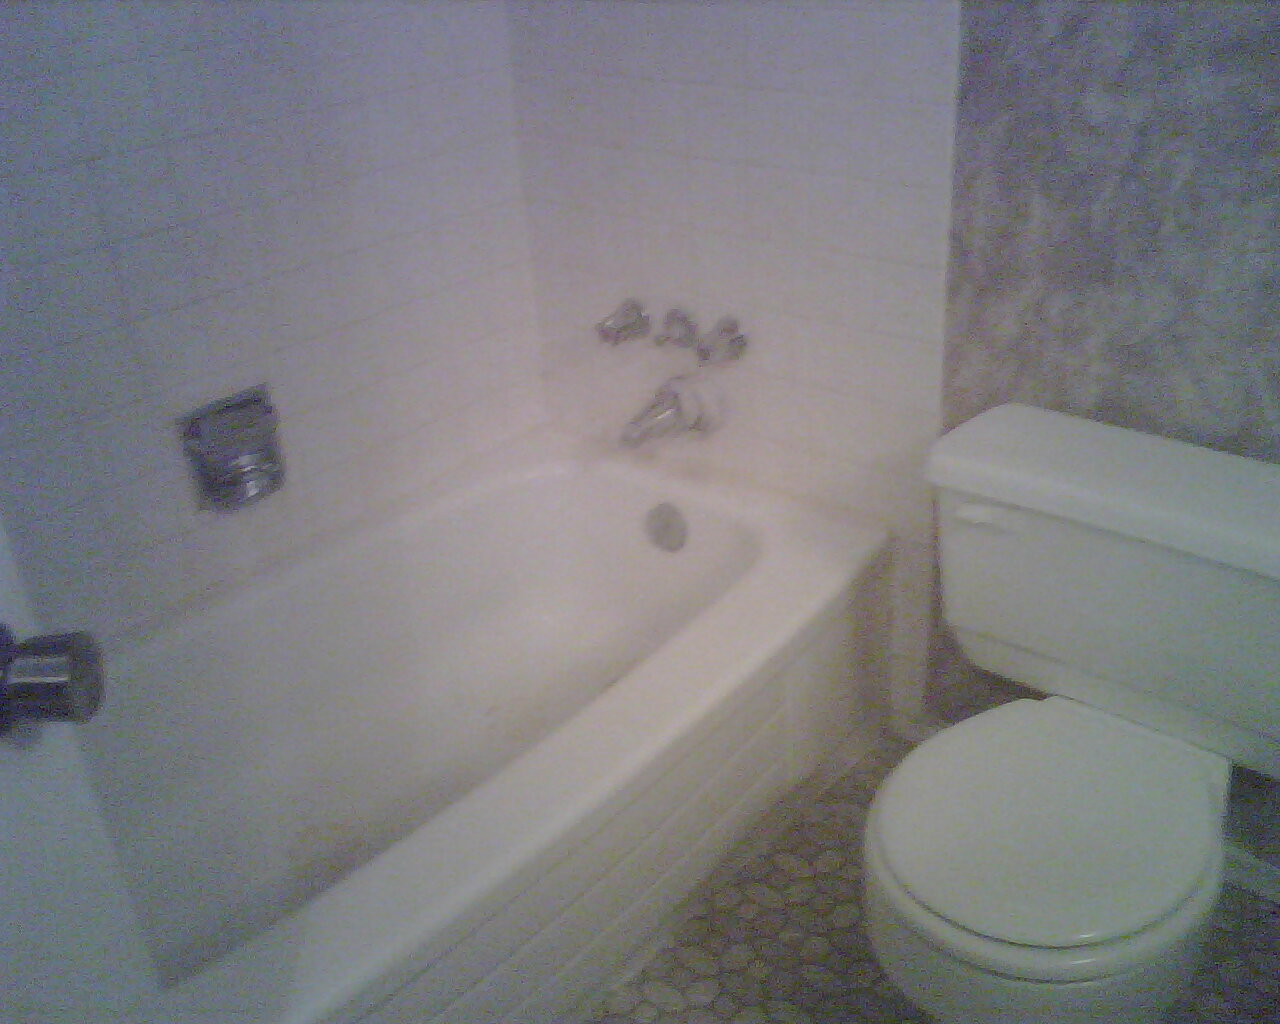 Upstairs (2nd Floor) bathroom's sink and bathtub